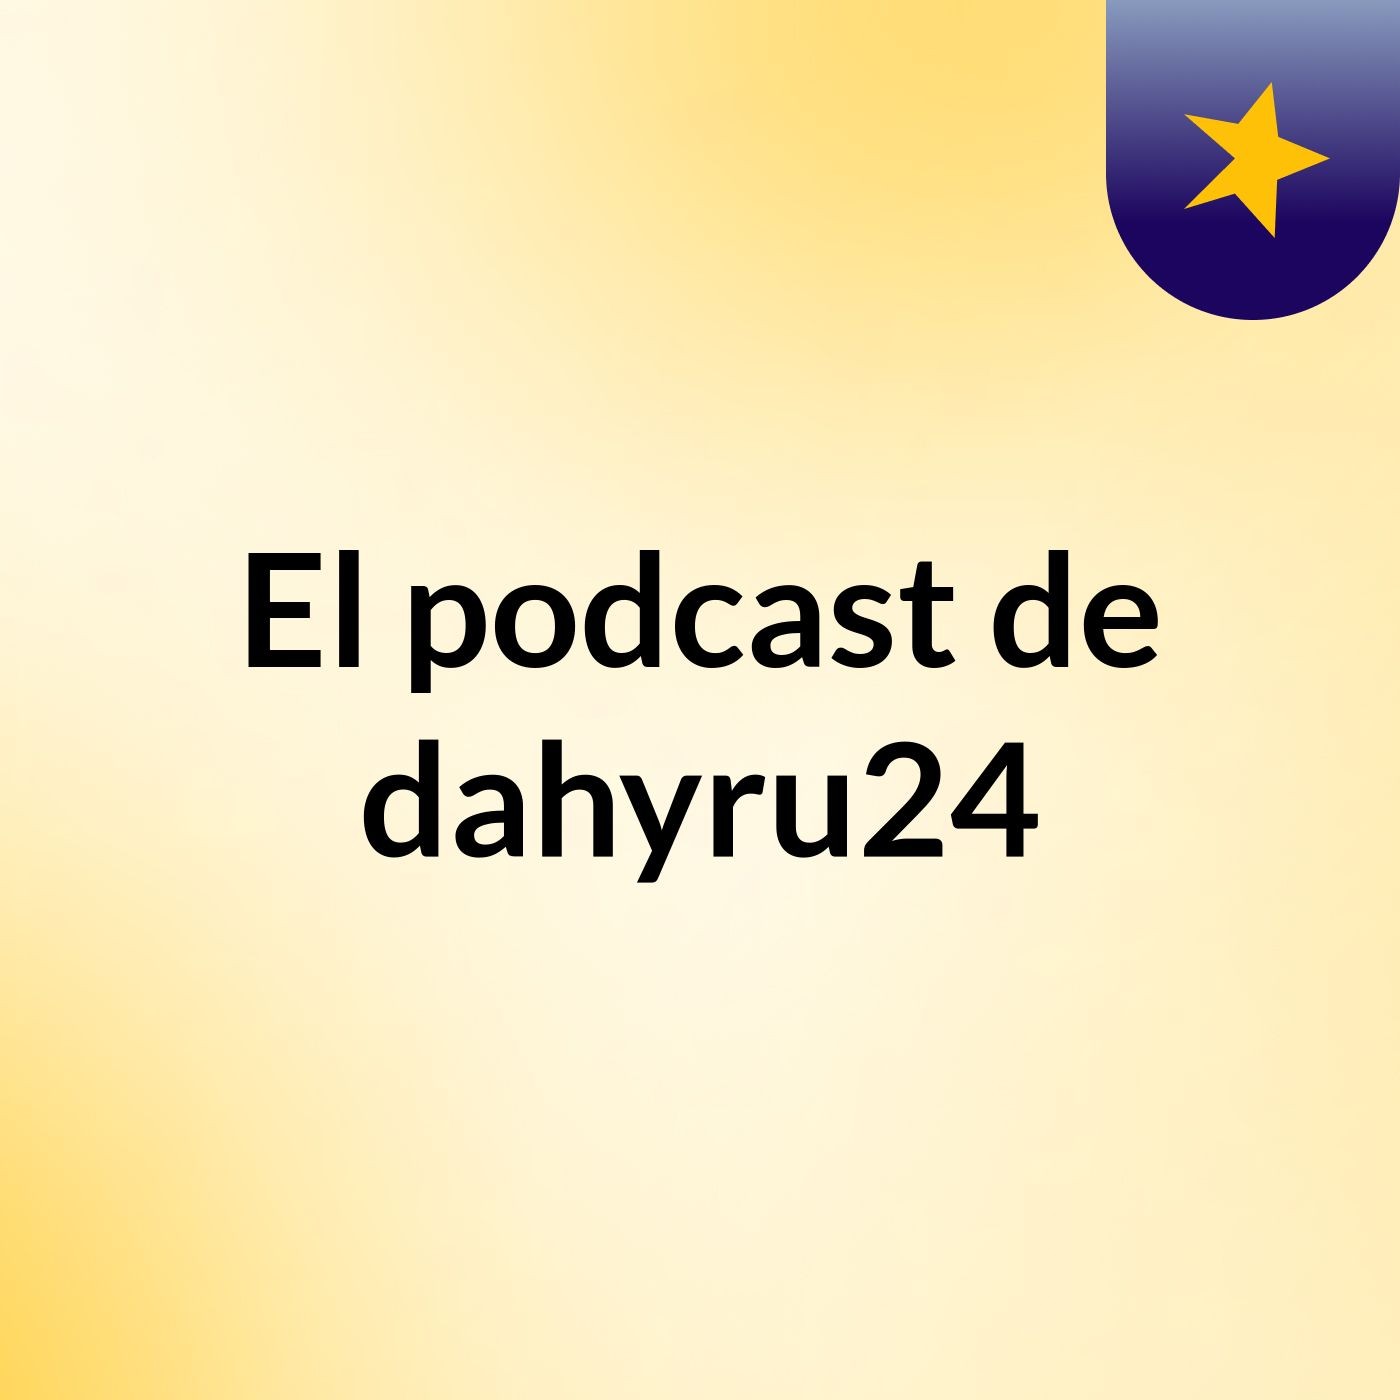 El podcast de dahyru24